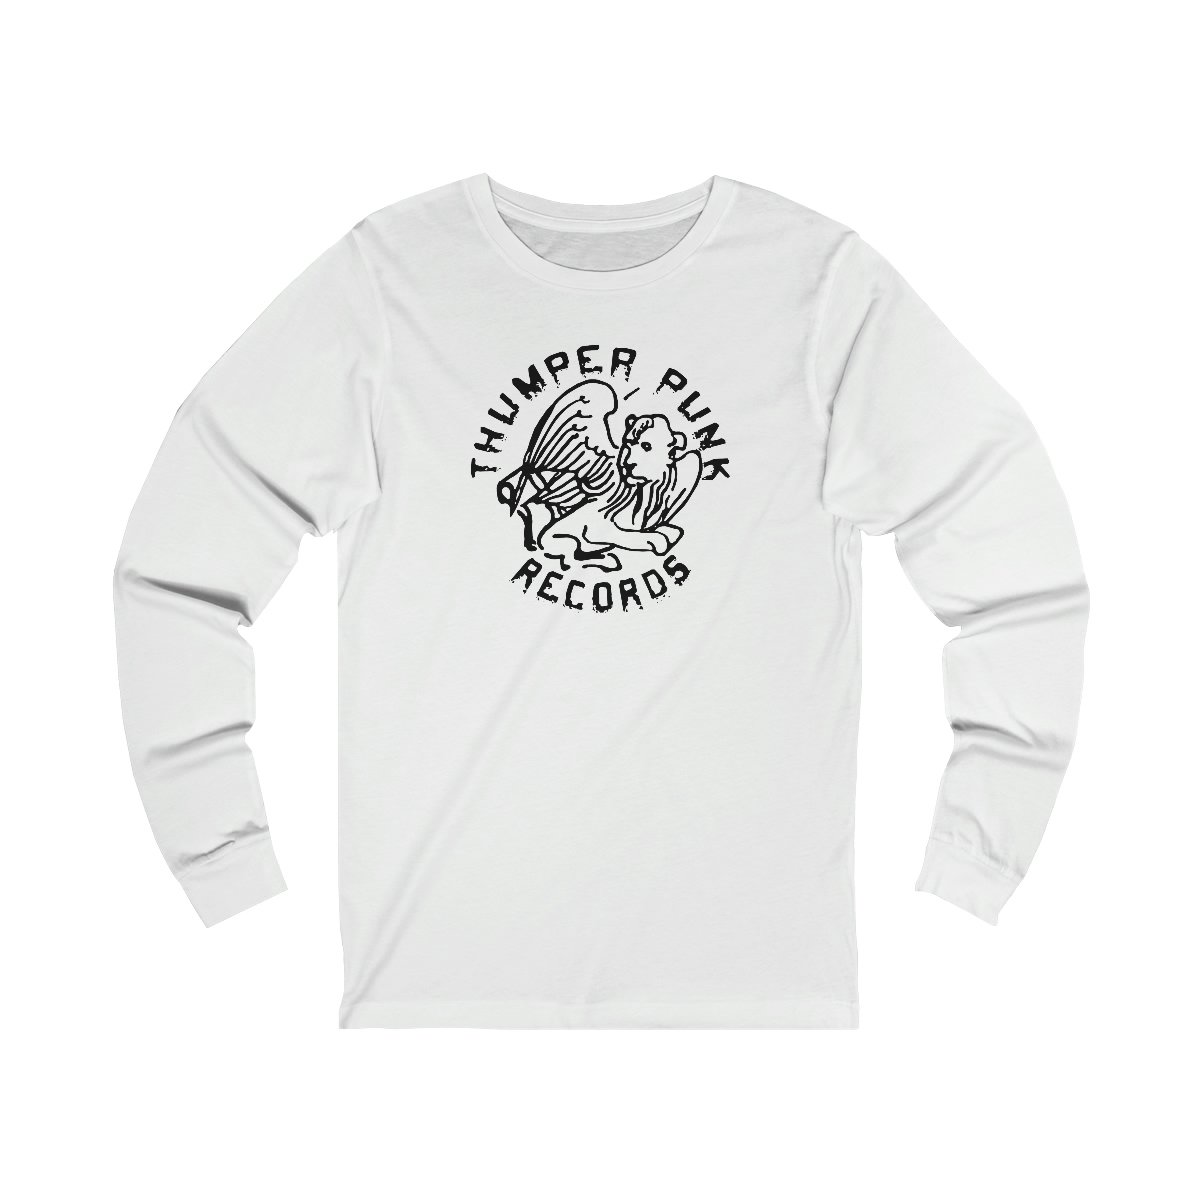 Thumper Punk Records – St. Mark Emblem Long Sleeve Tshirt